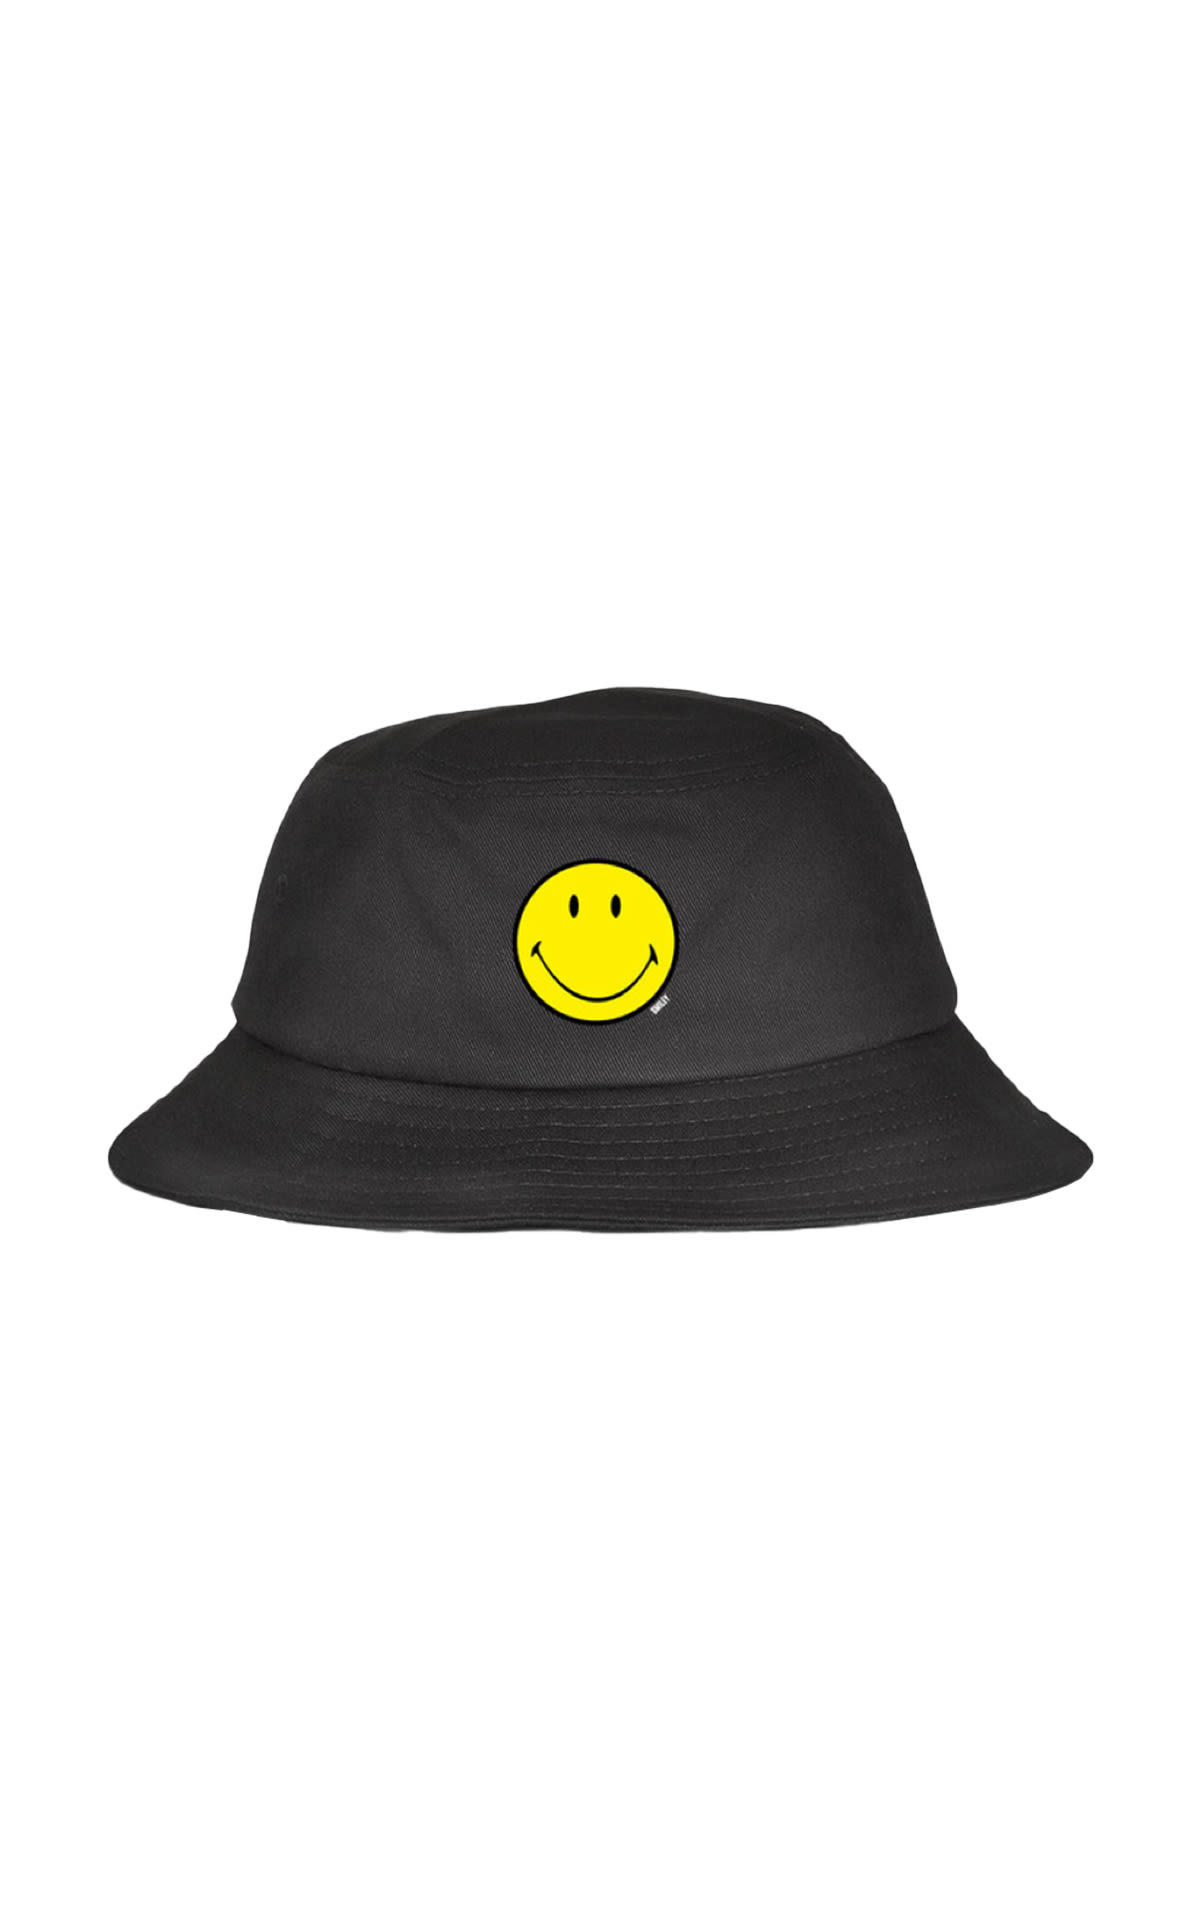 Smiley x Do Good Bucket hat L/XL black from Bicester Village